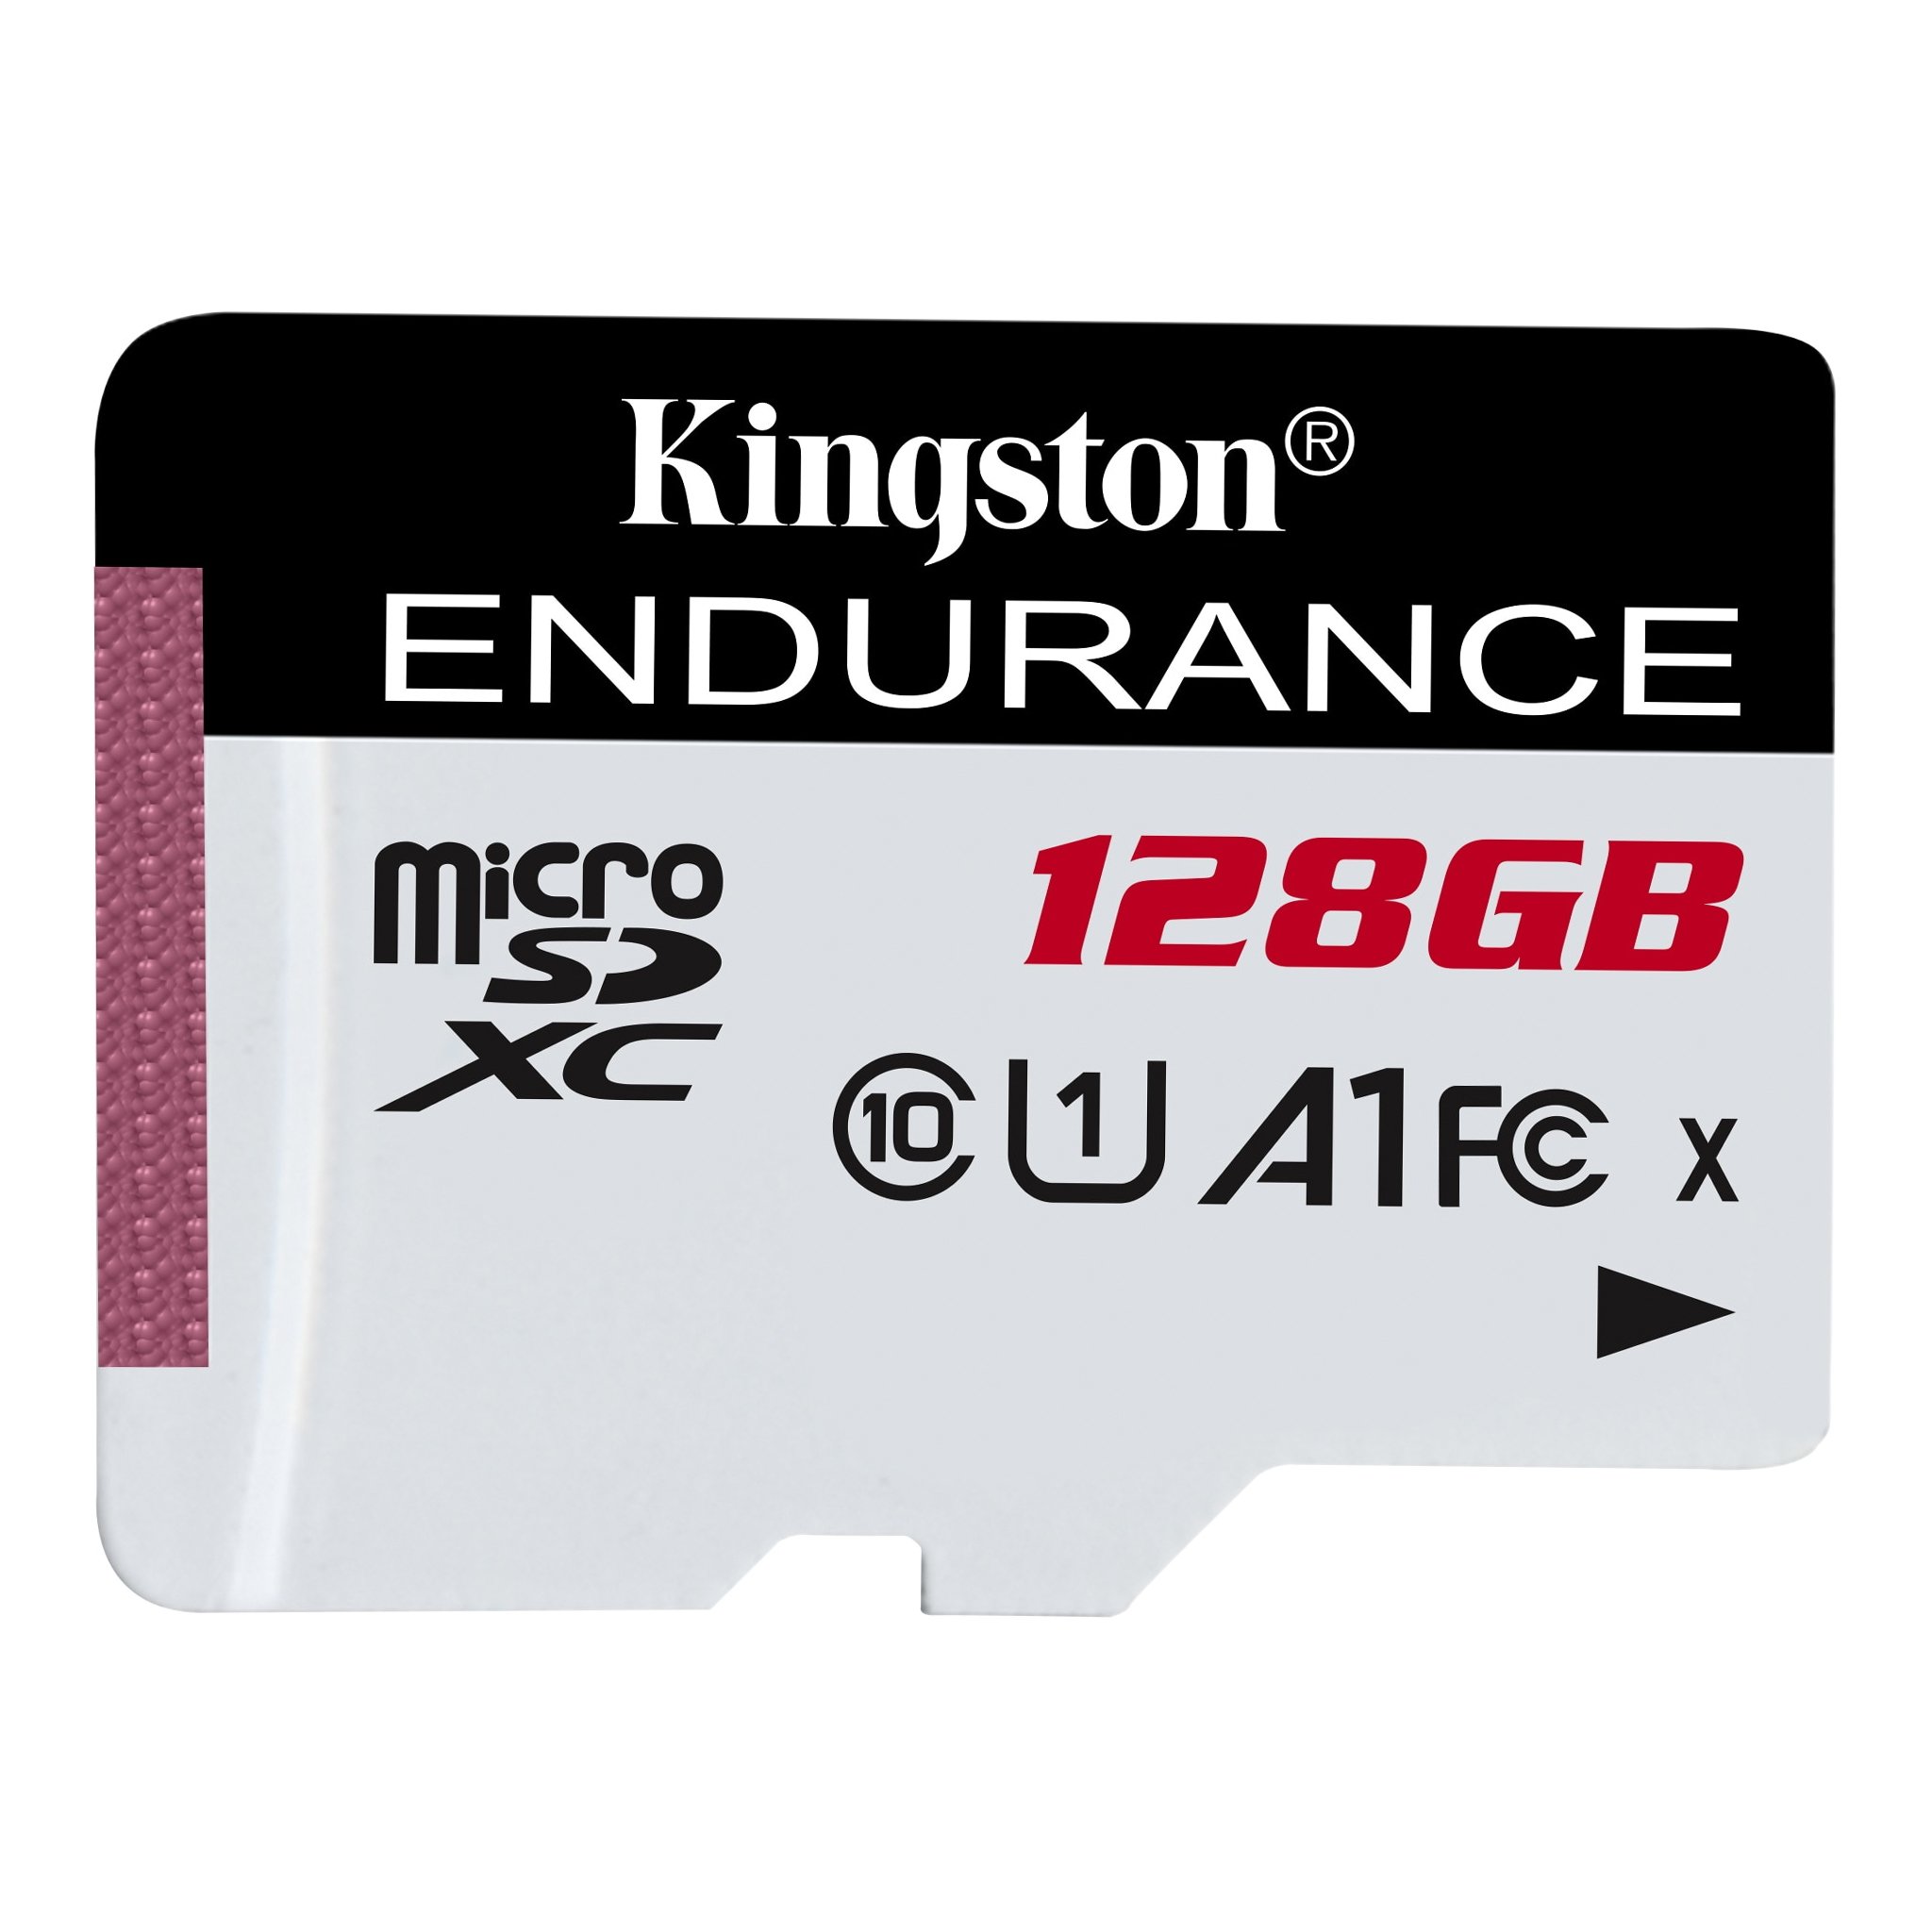 High microSD Card - Kingston Technology